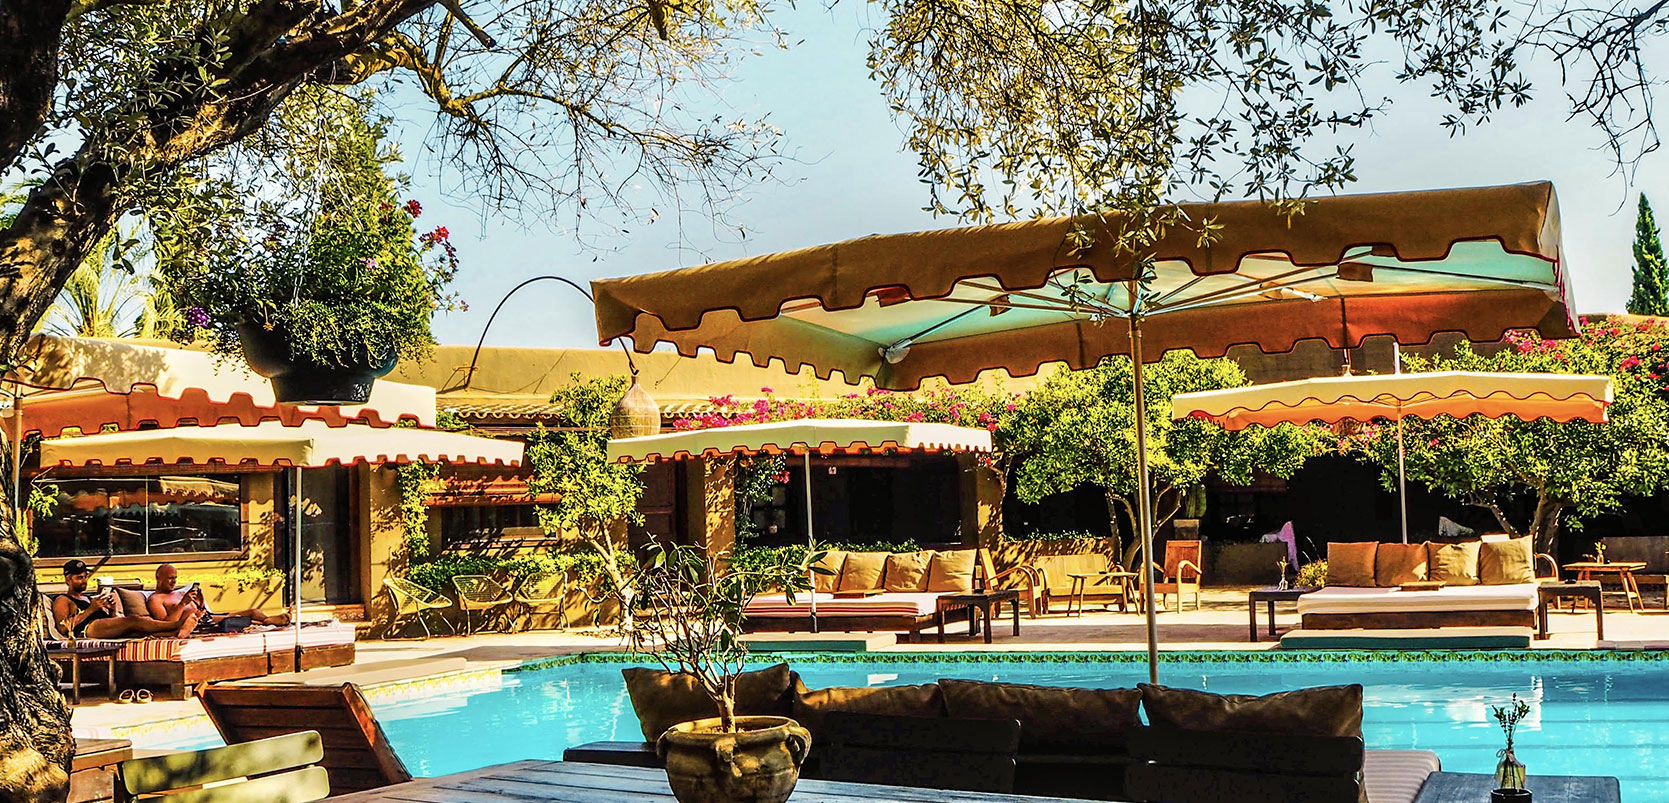 home – RacoIbiza – Restaurant Pool Bar in Ibiza